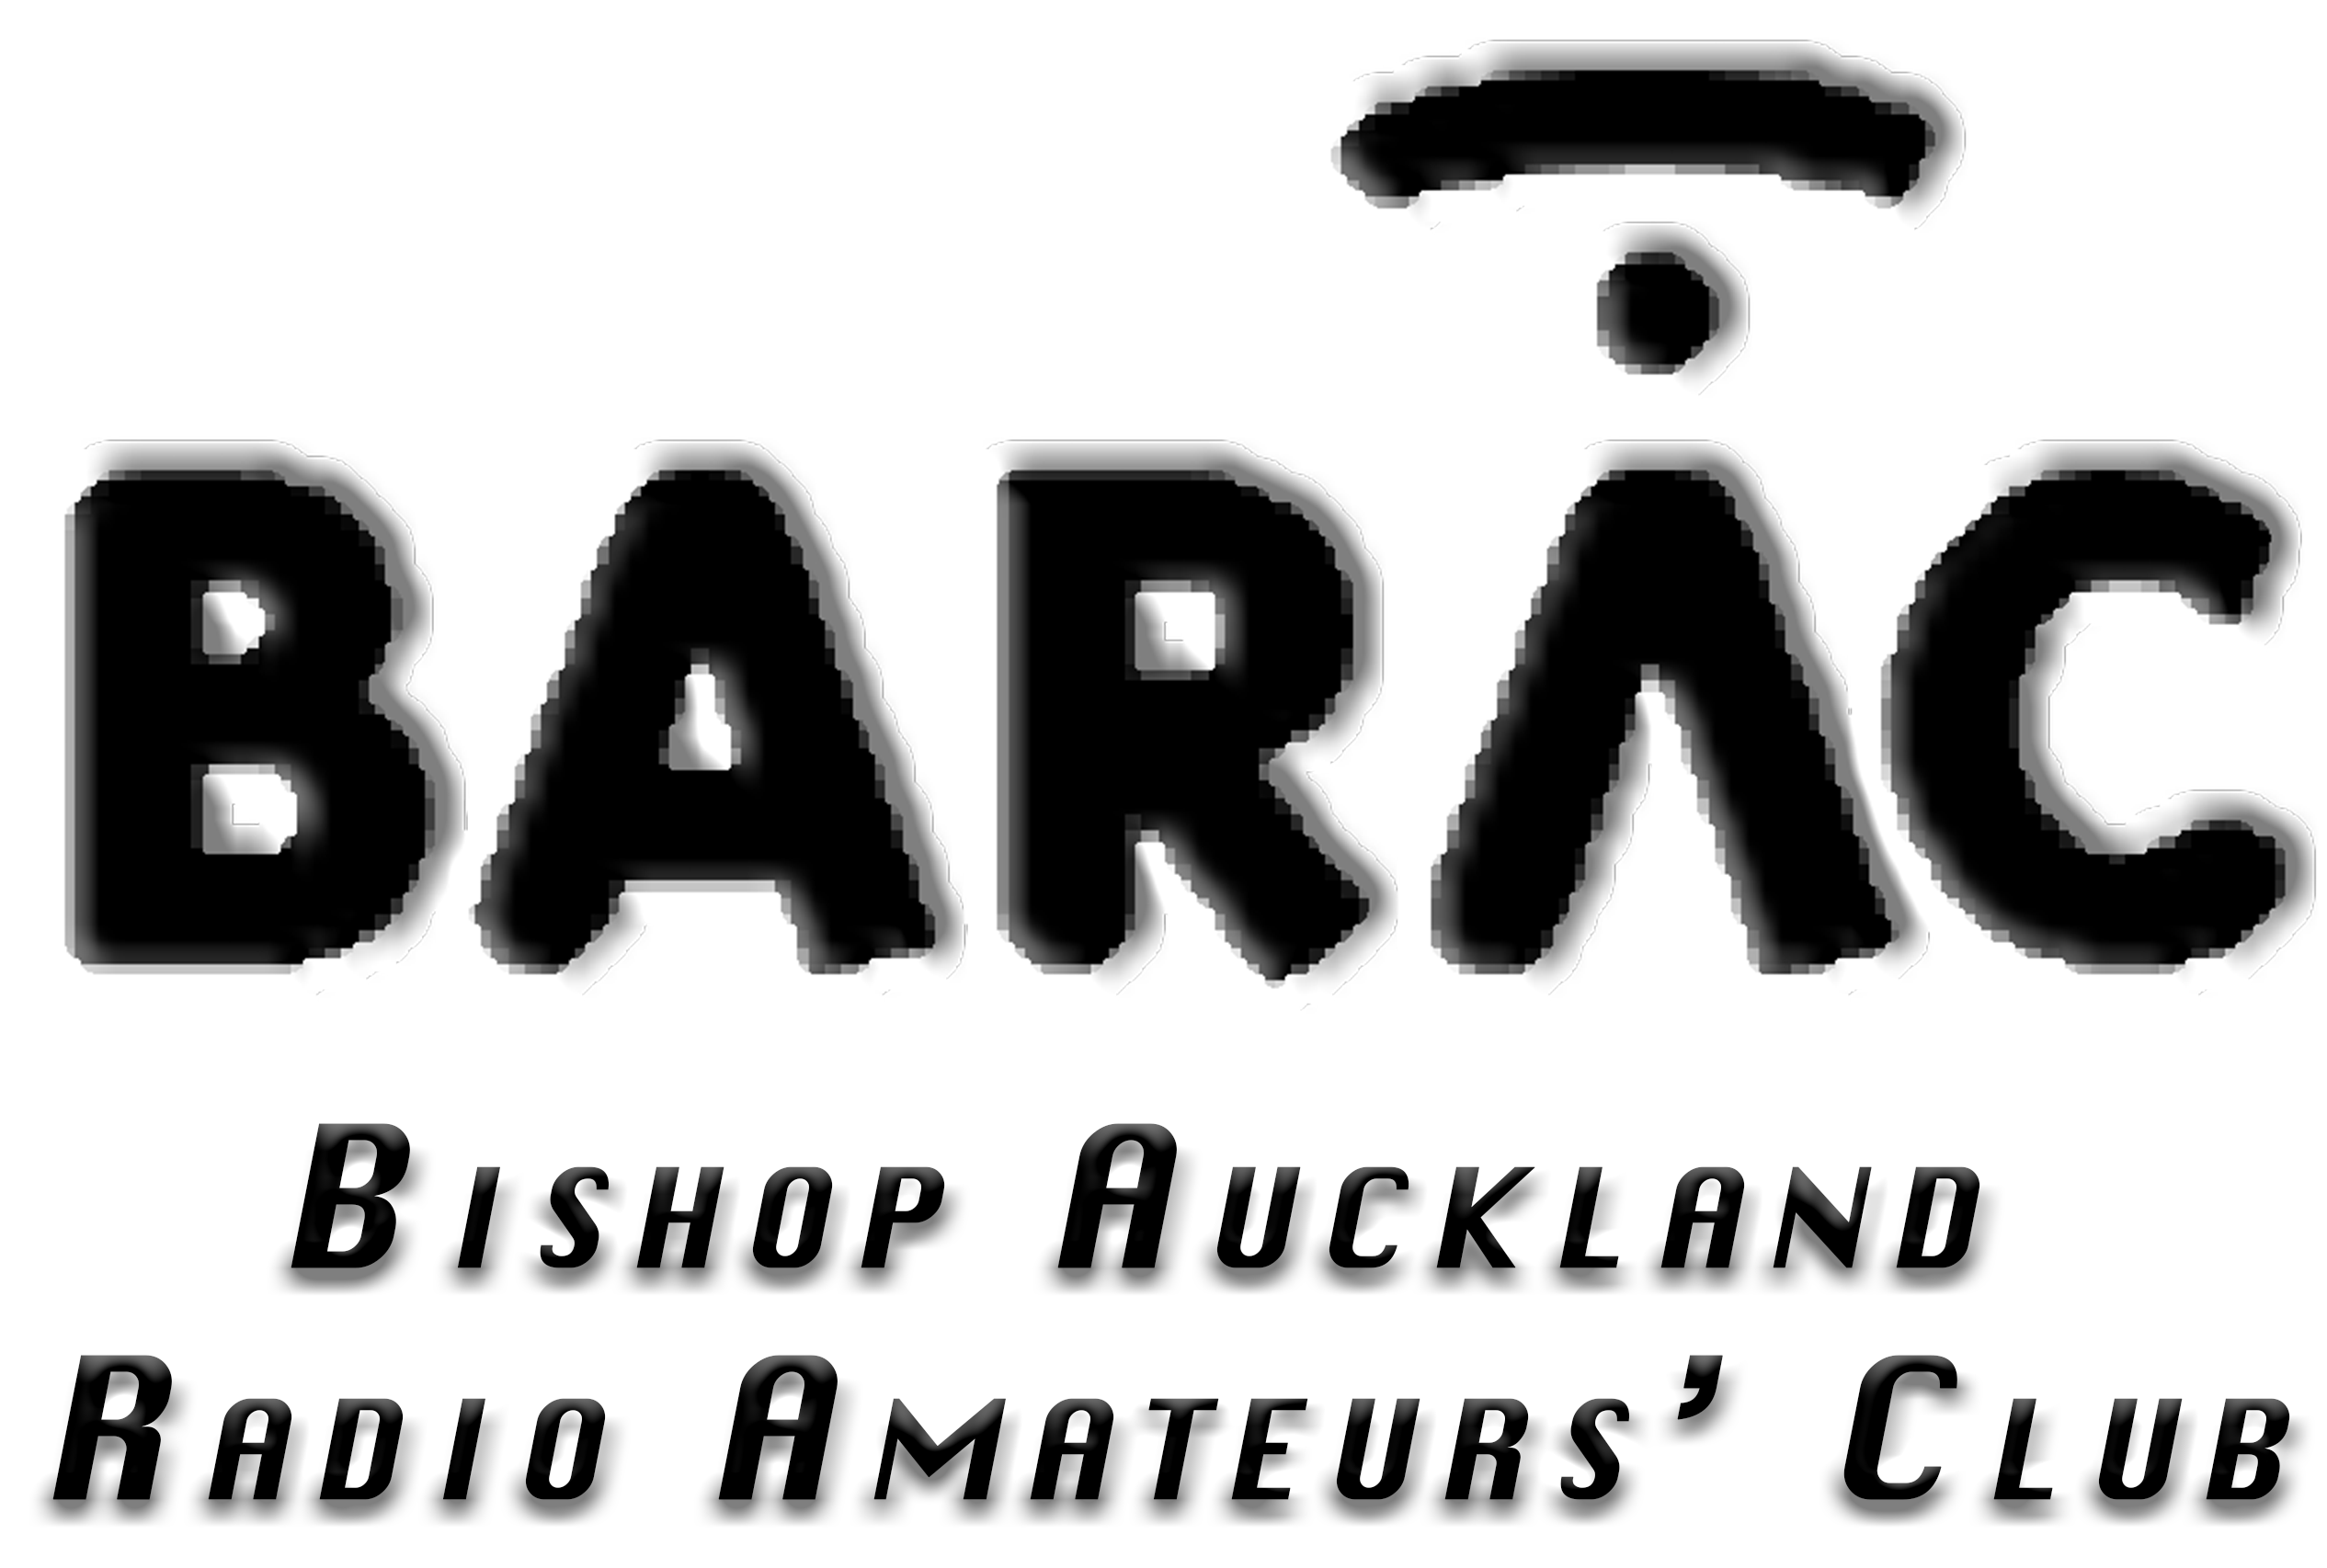 Bishop Auckland Radio Amateurs Club